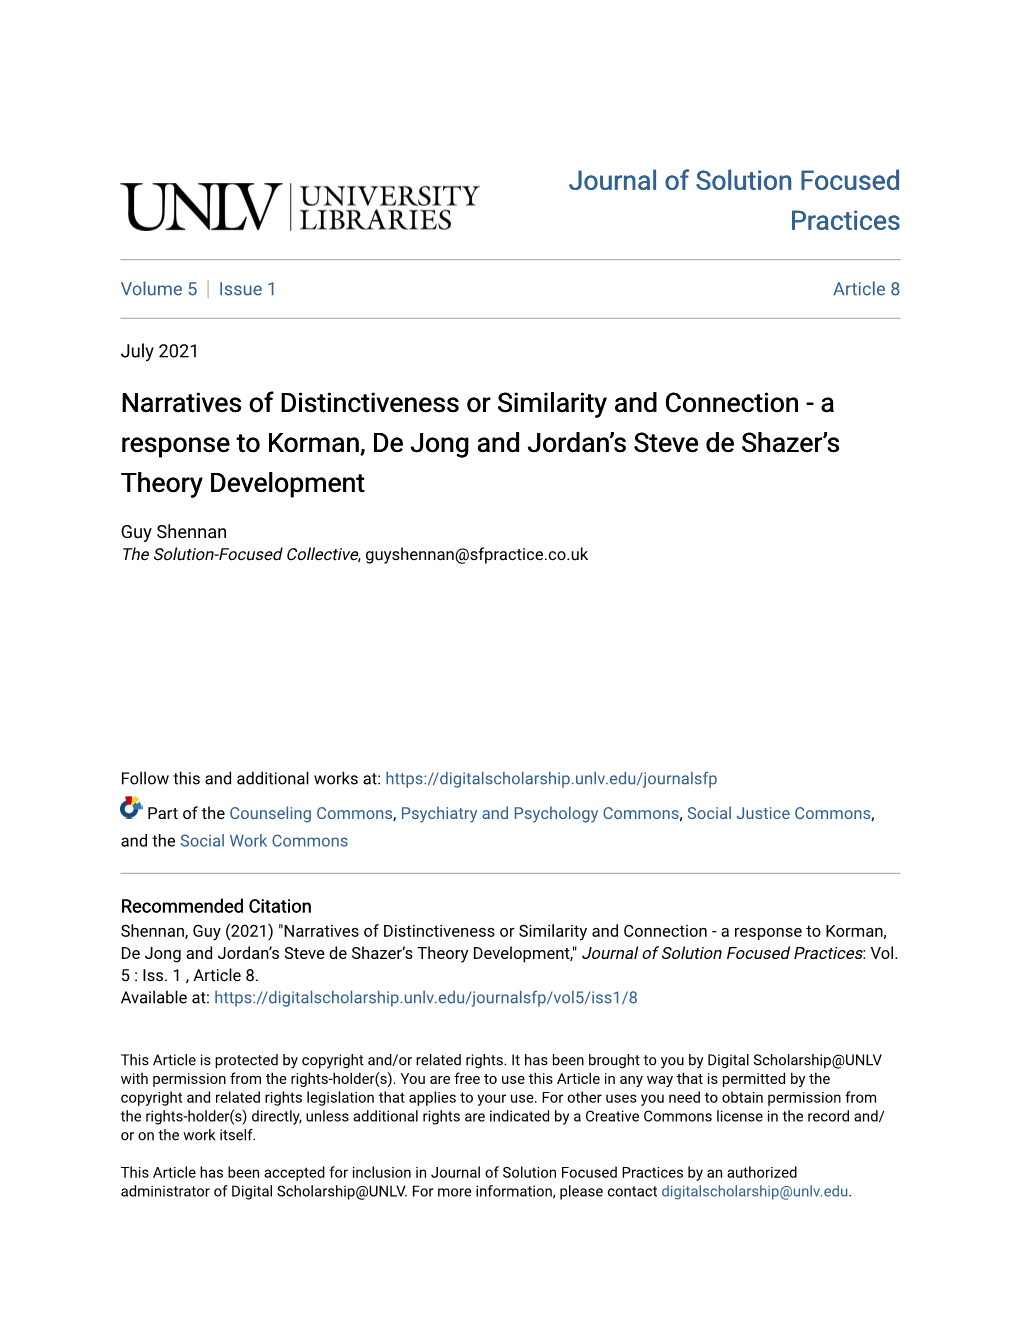 Narratives of Distinctiveness Or Similarity and Connection - a Response to Korman, De Jong and Jordan’S Steve De Shazer’S Theory Development